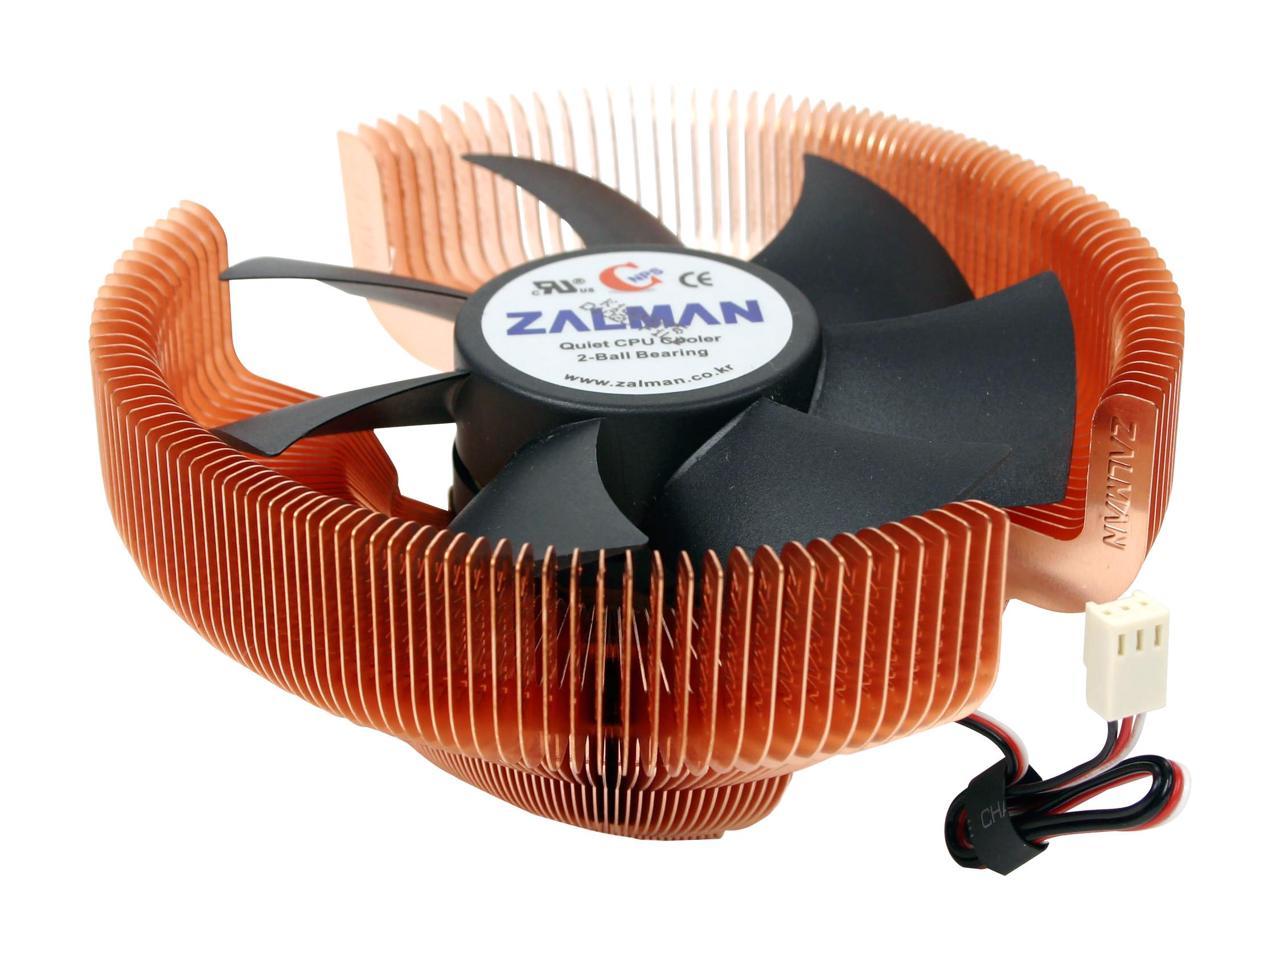 Кулер на русском. Кулер 120 мм Zalman. Zalman quiet Fan 120mm. Zalman quiet CPU Cooler 2 Ball-bearing. Zalman CNPS 100 мм медный.